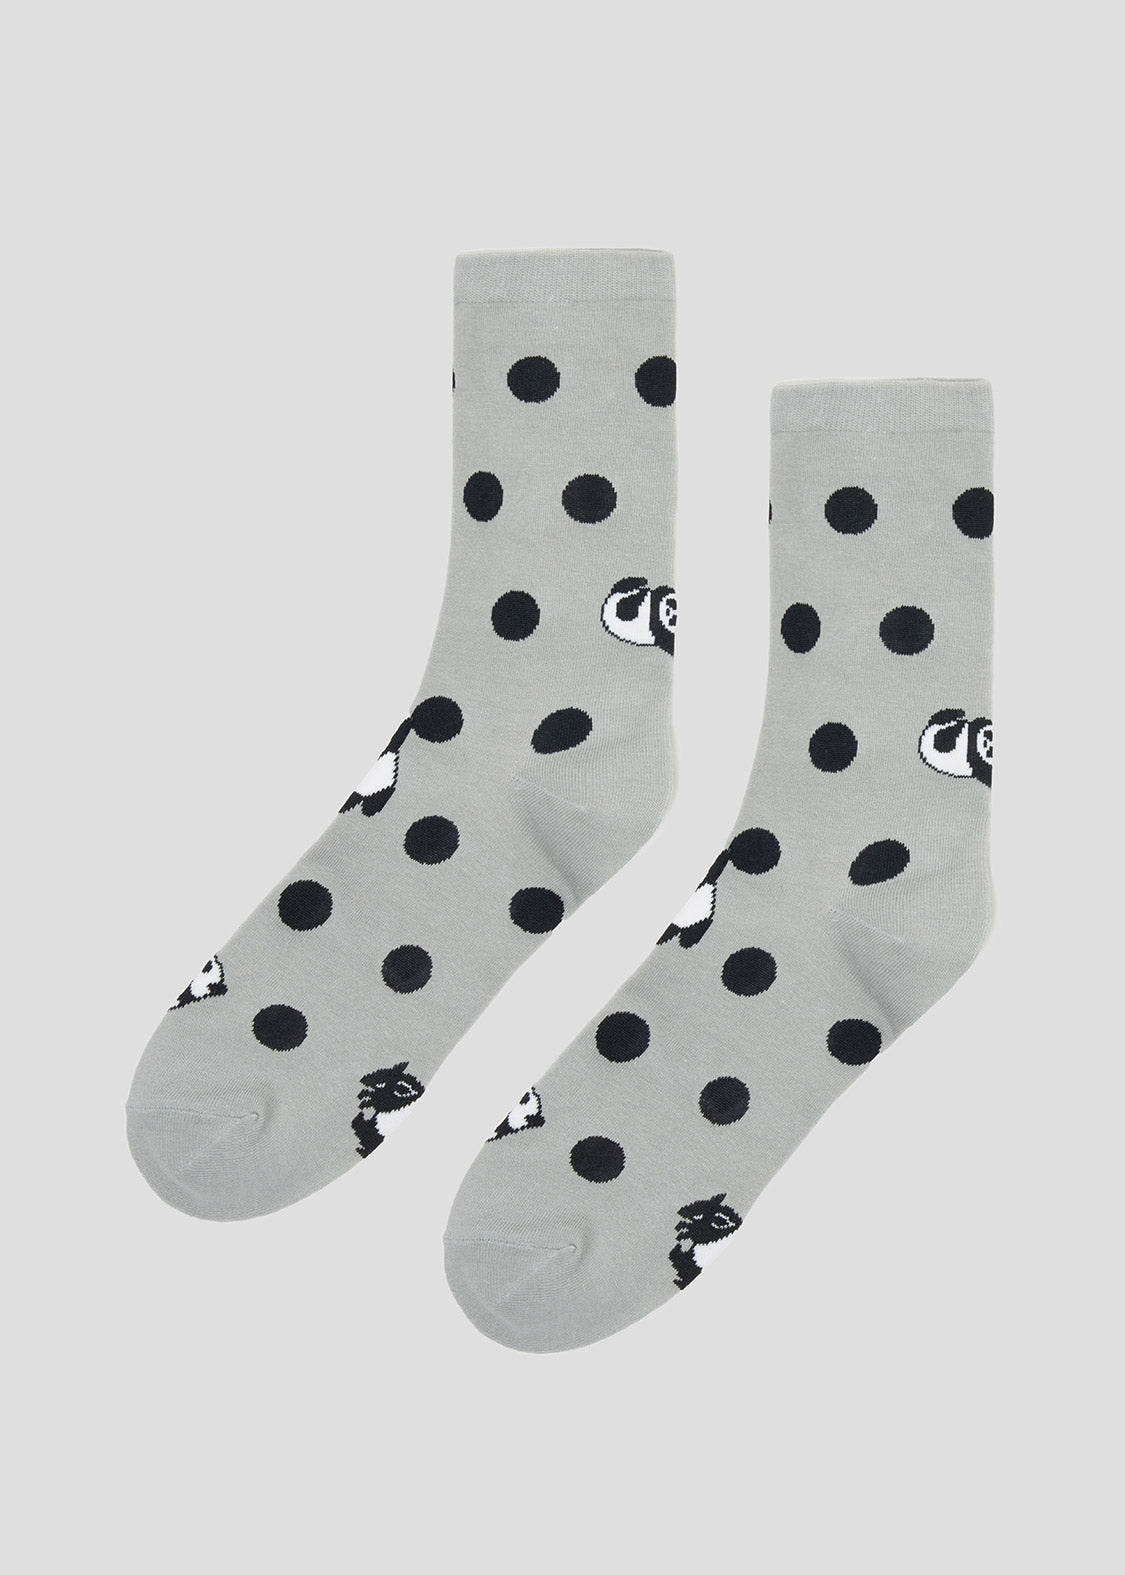 Middle Socks (Rolling Pandas 2)